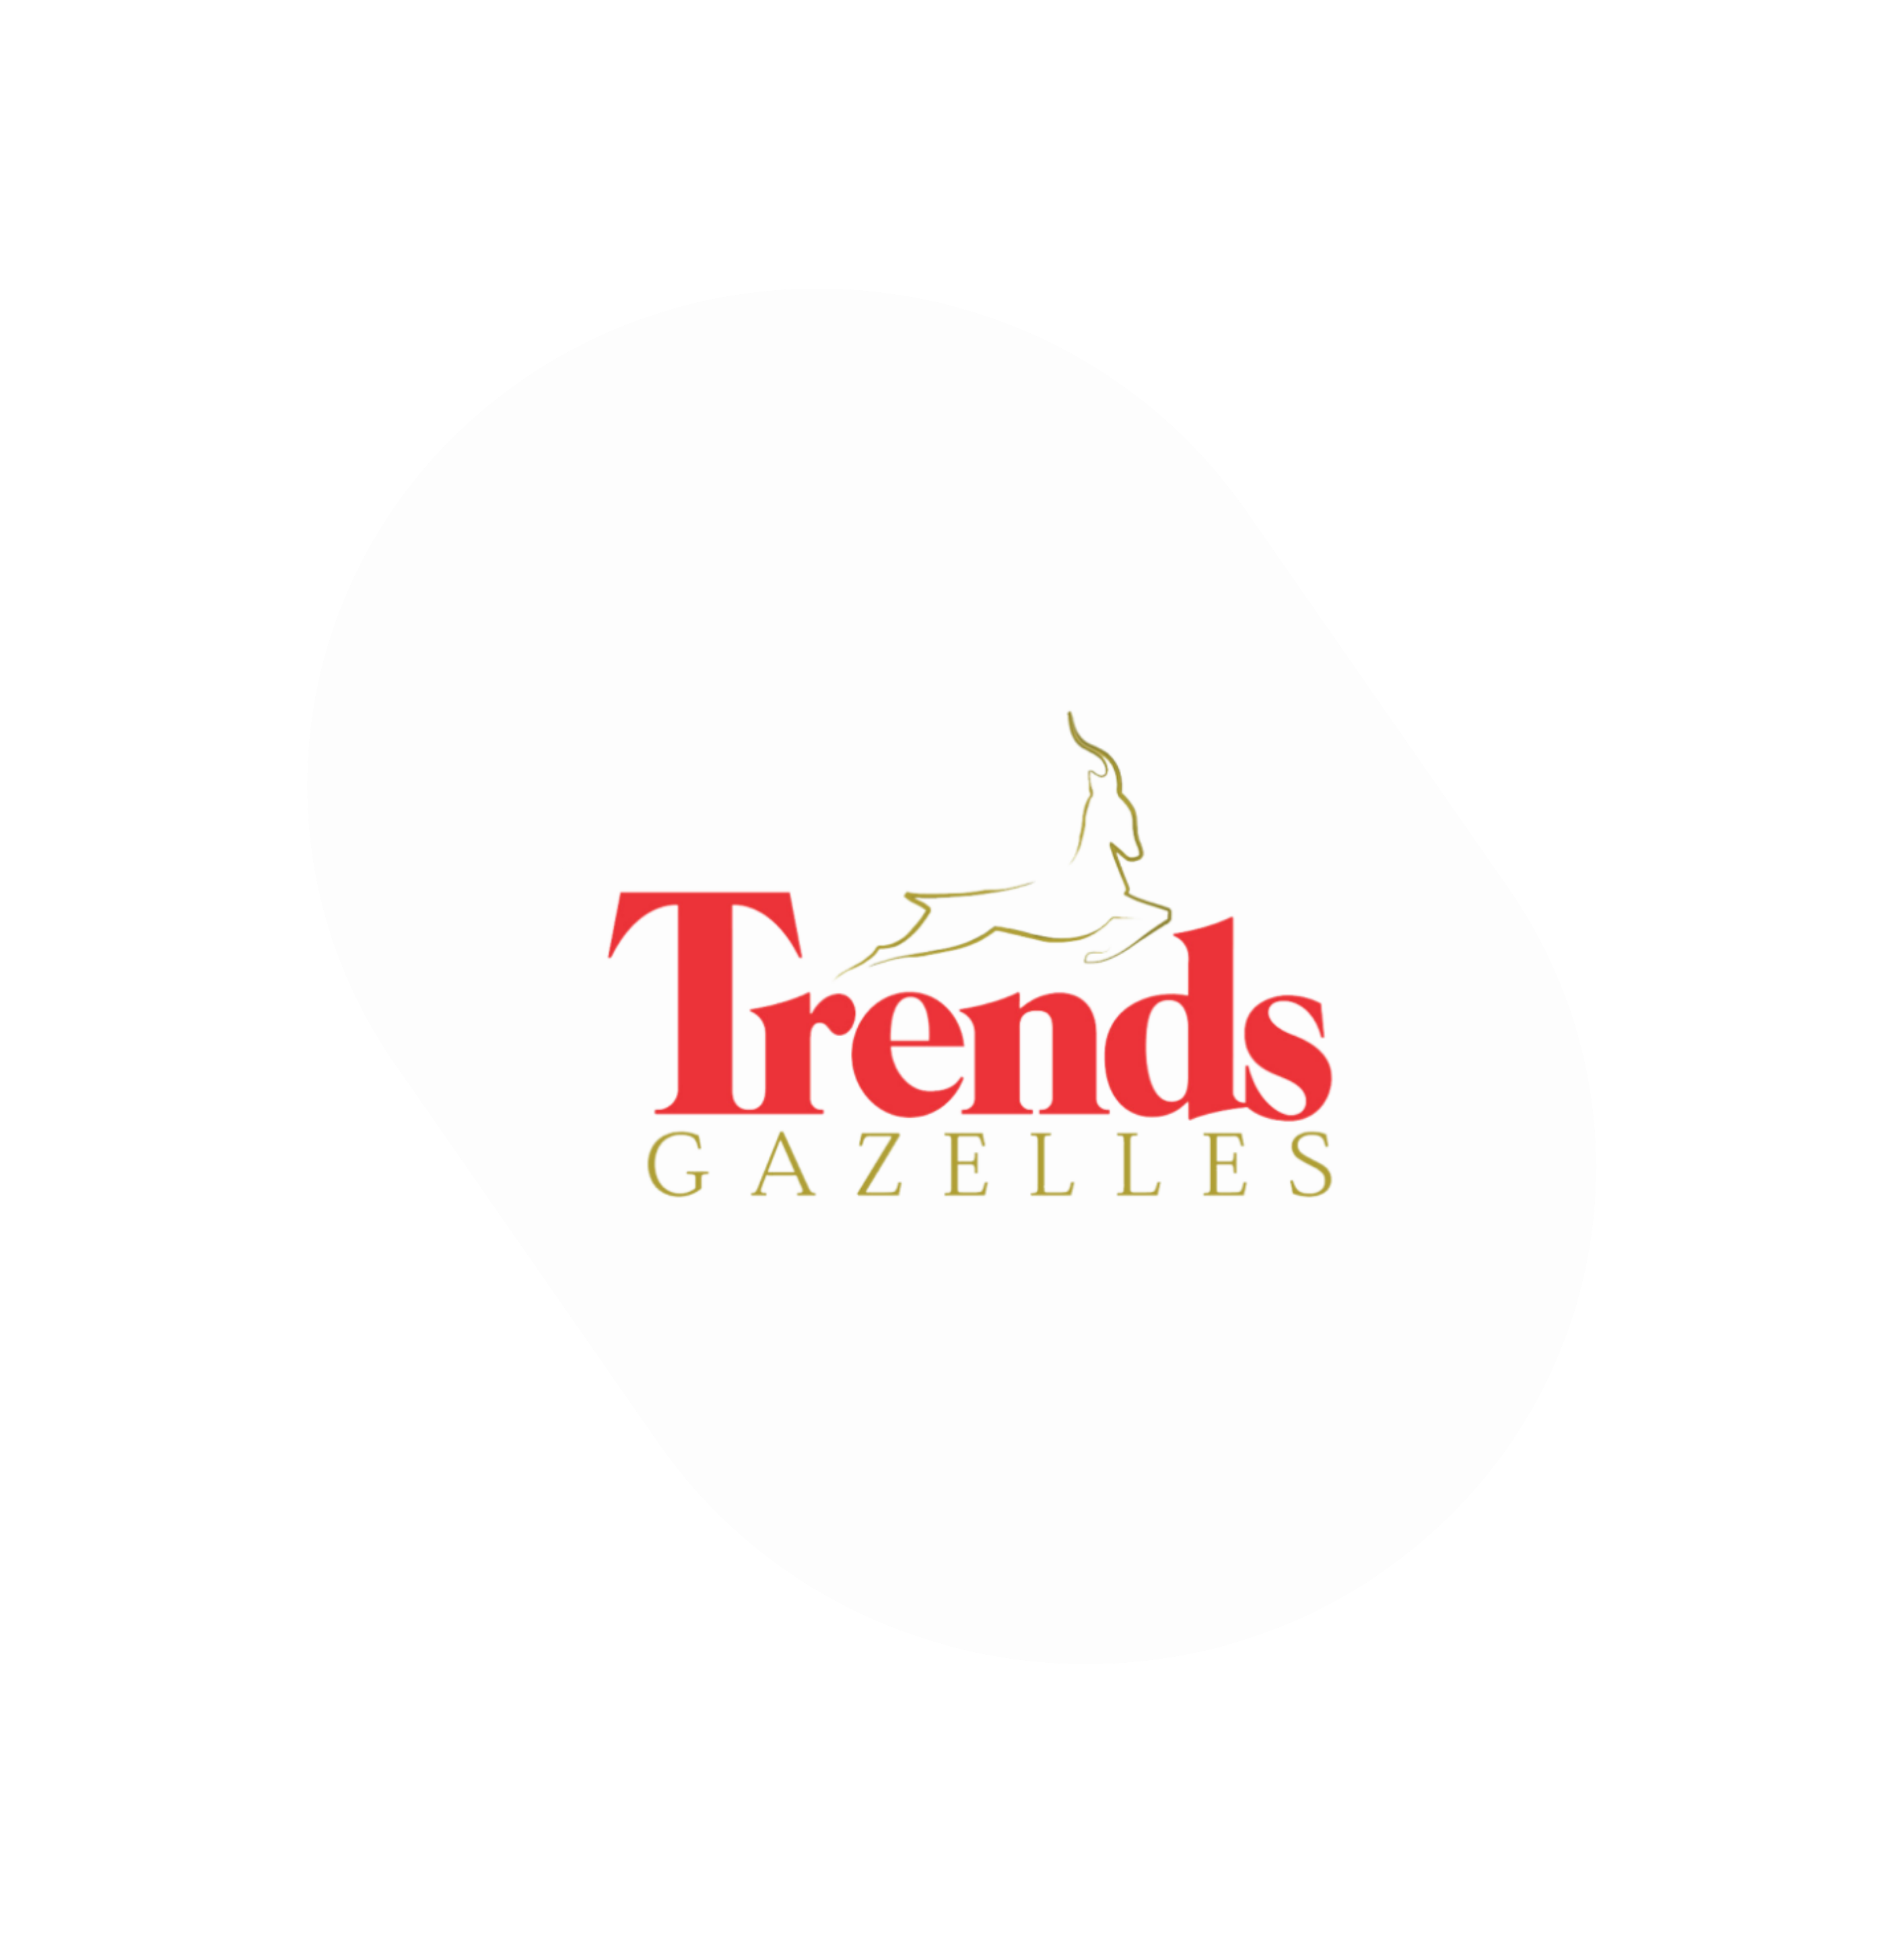  Trends Gazelle nomination